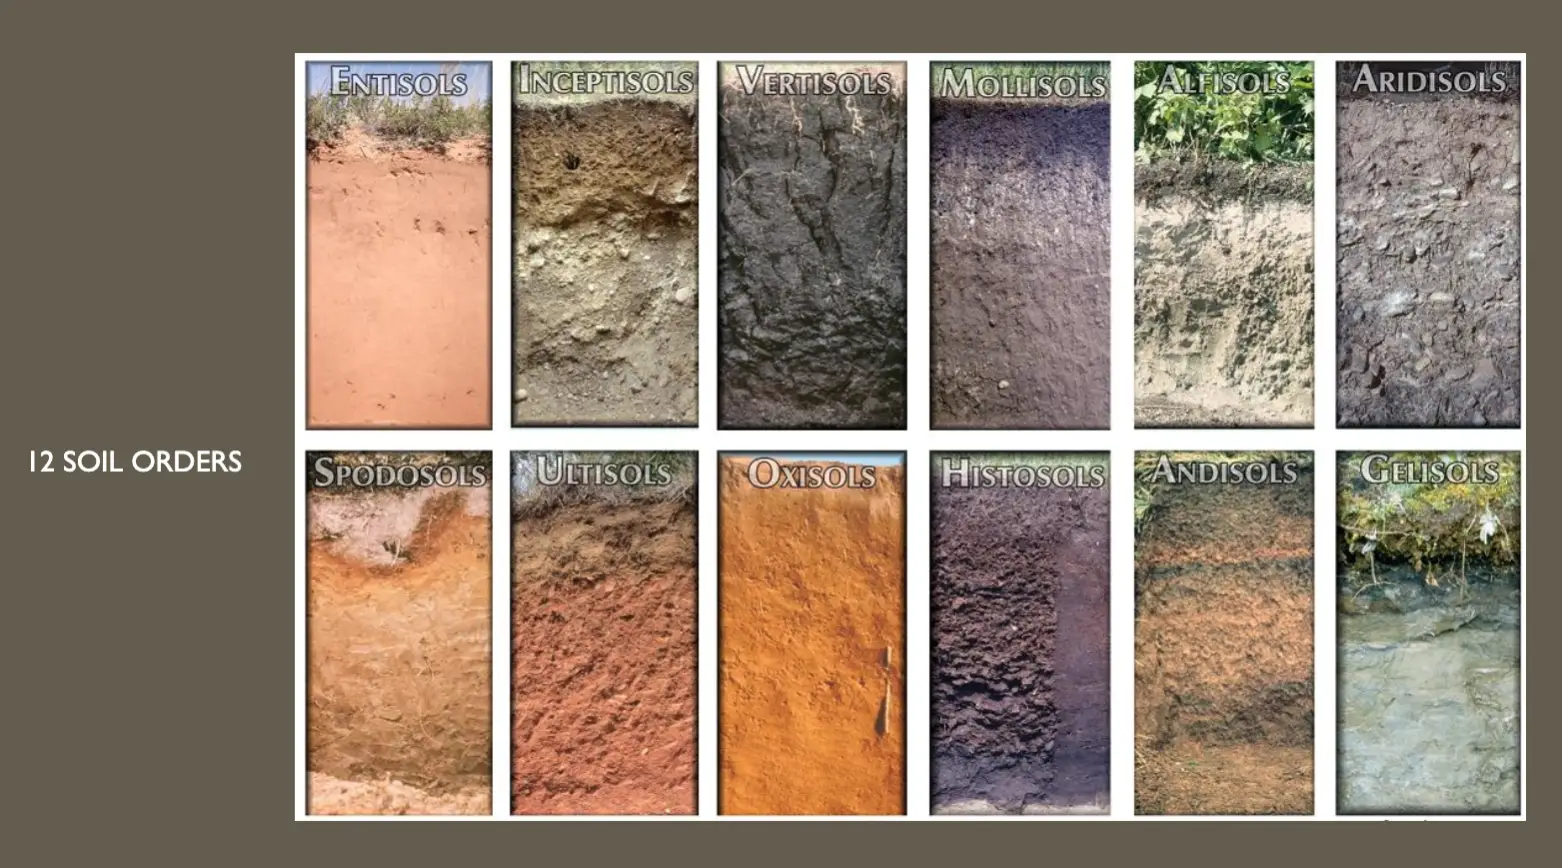 12 Soil Orders - vineyard soil